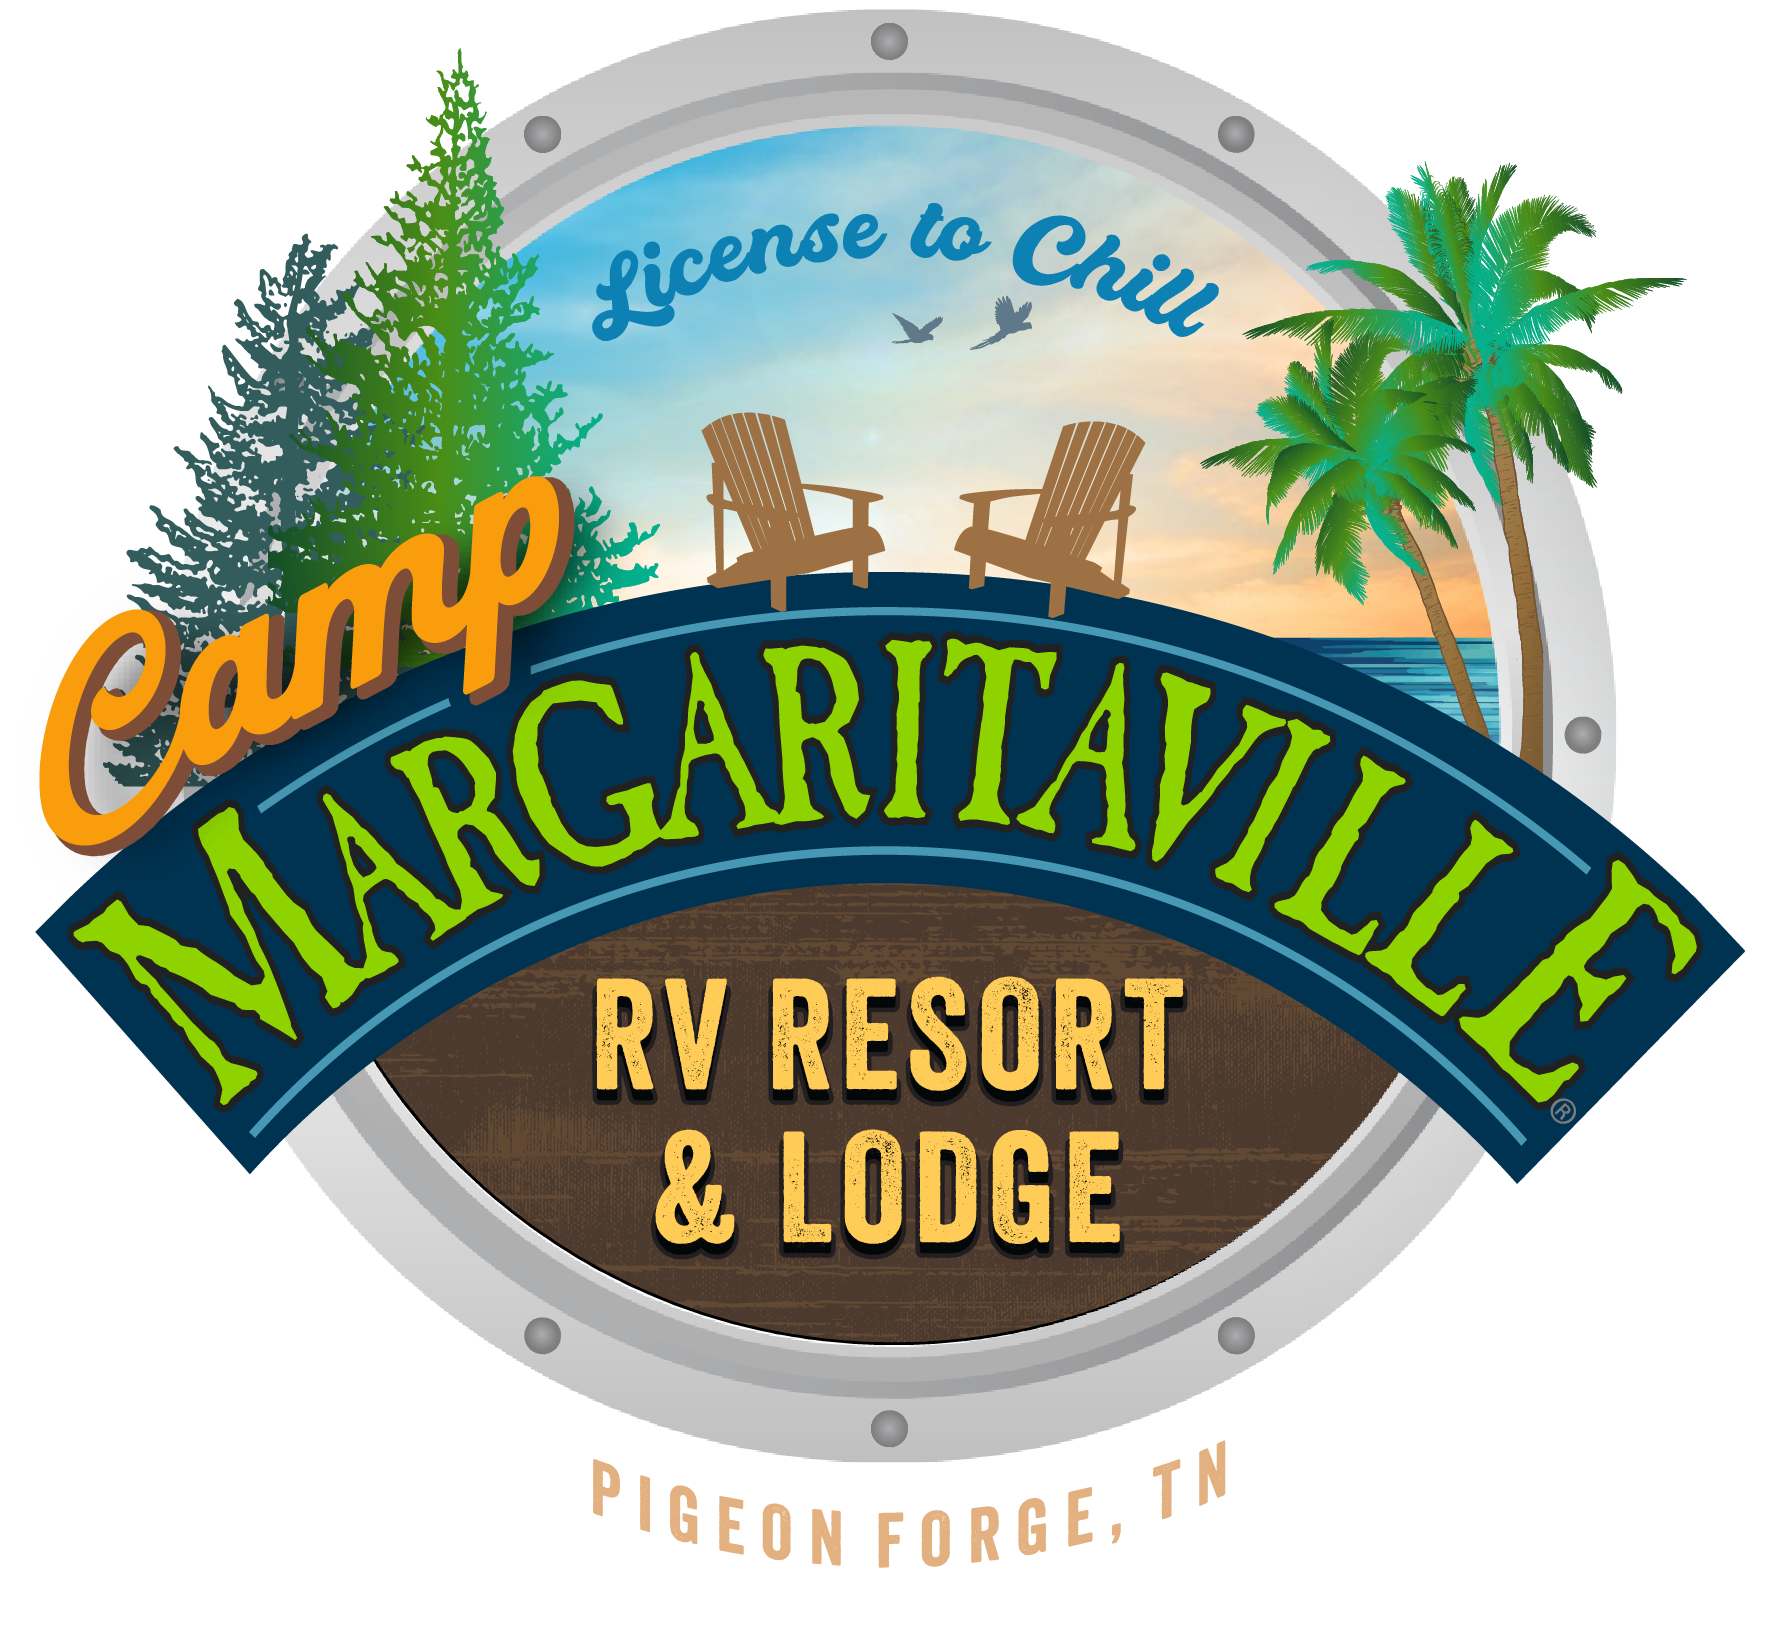 Camp Margaritaville RV Resort & Lodge Pigeon Forge Logo